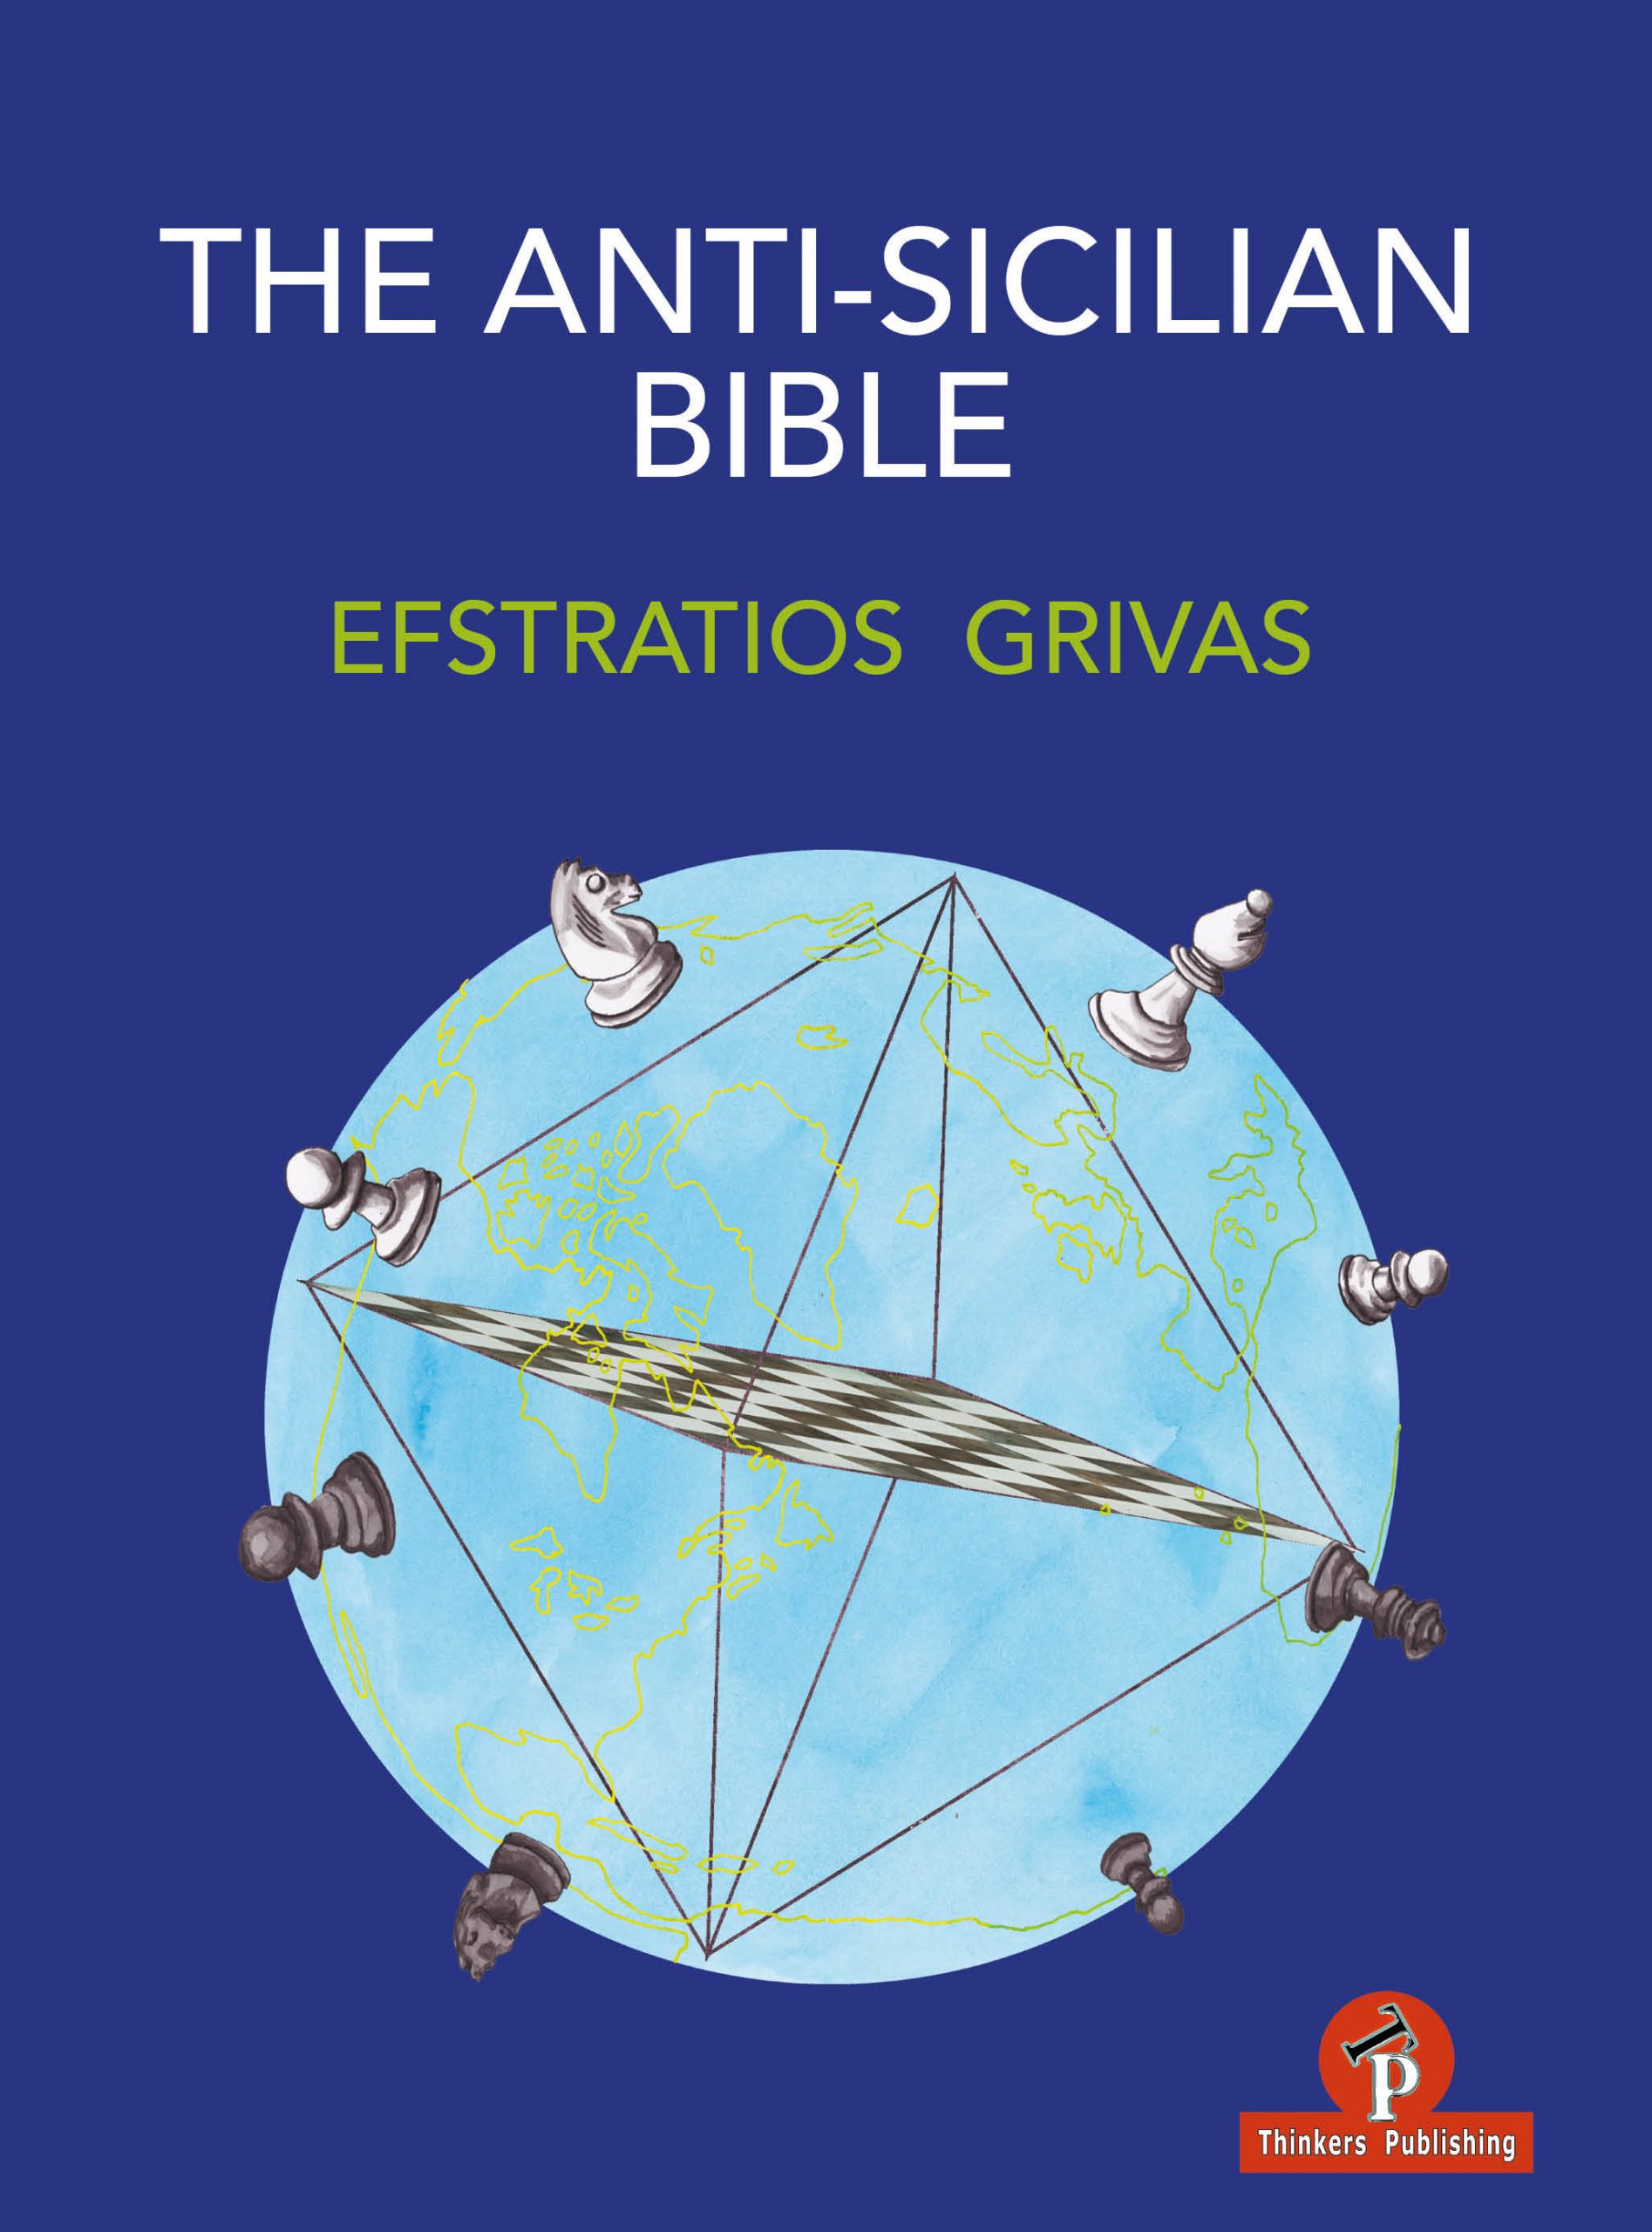 The Anti-Sicilian Bible - Efstratios Grivas